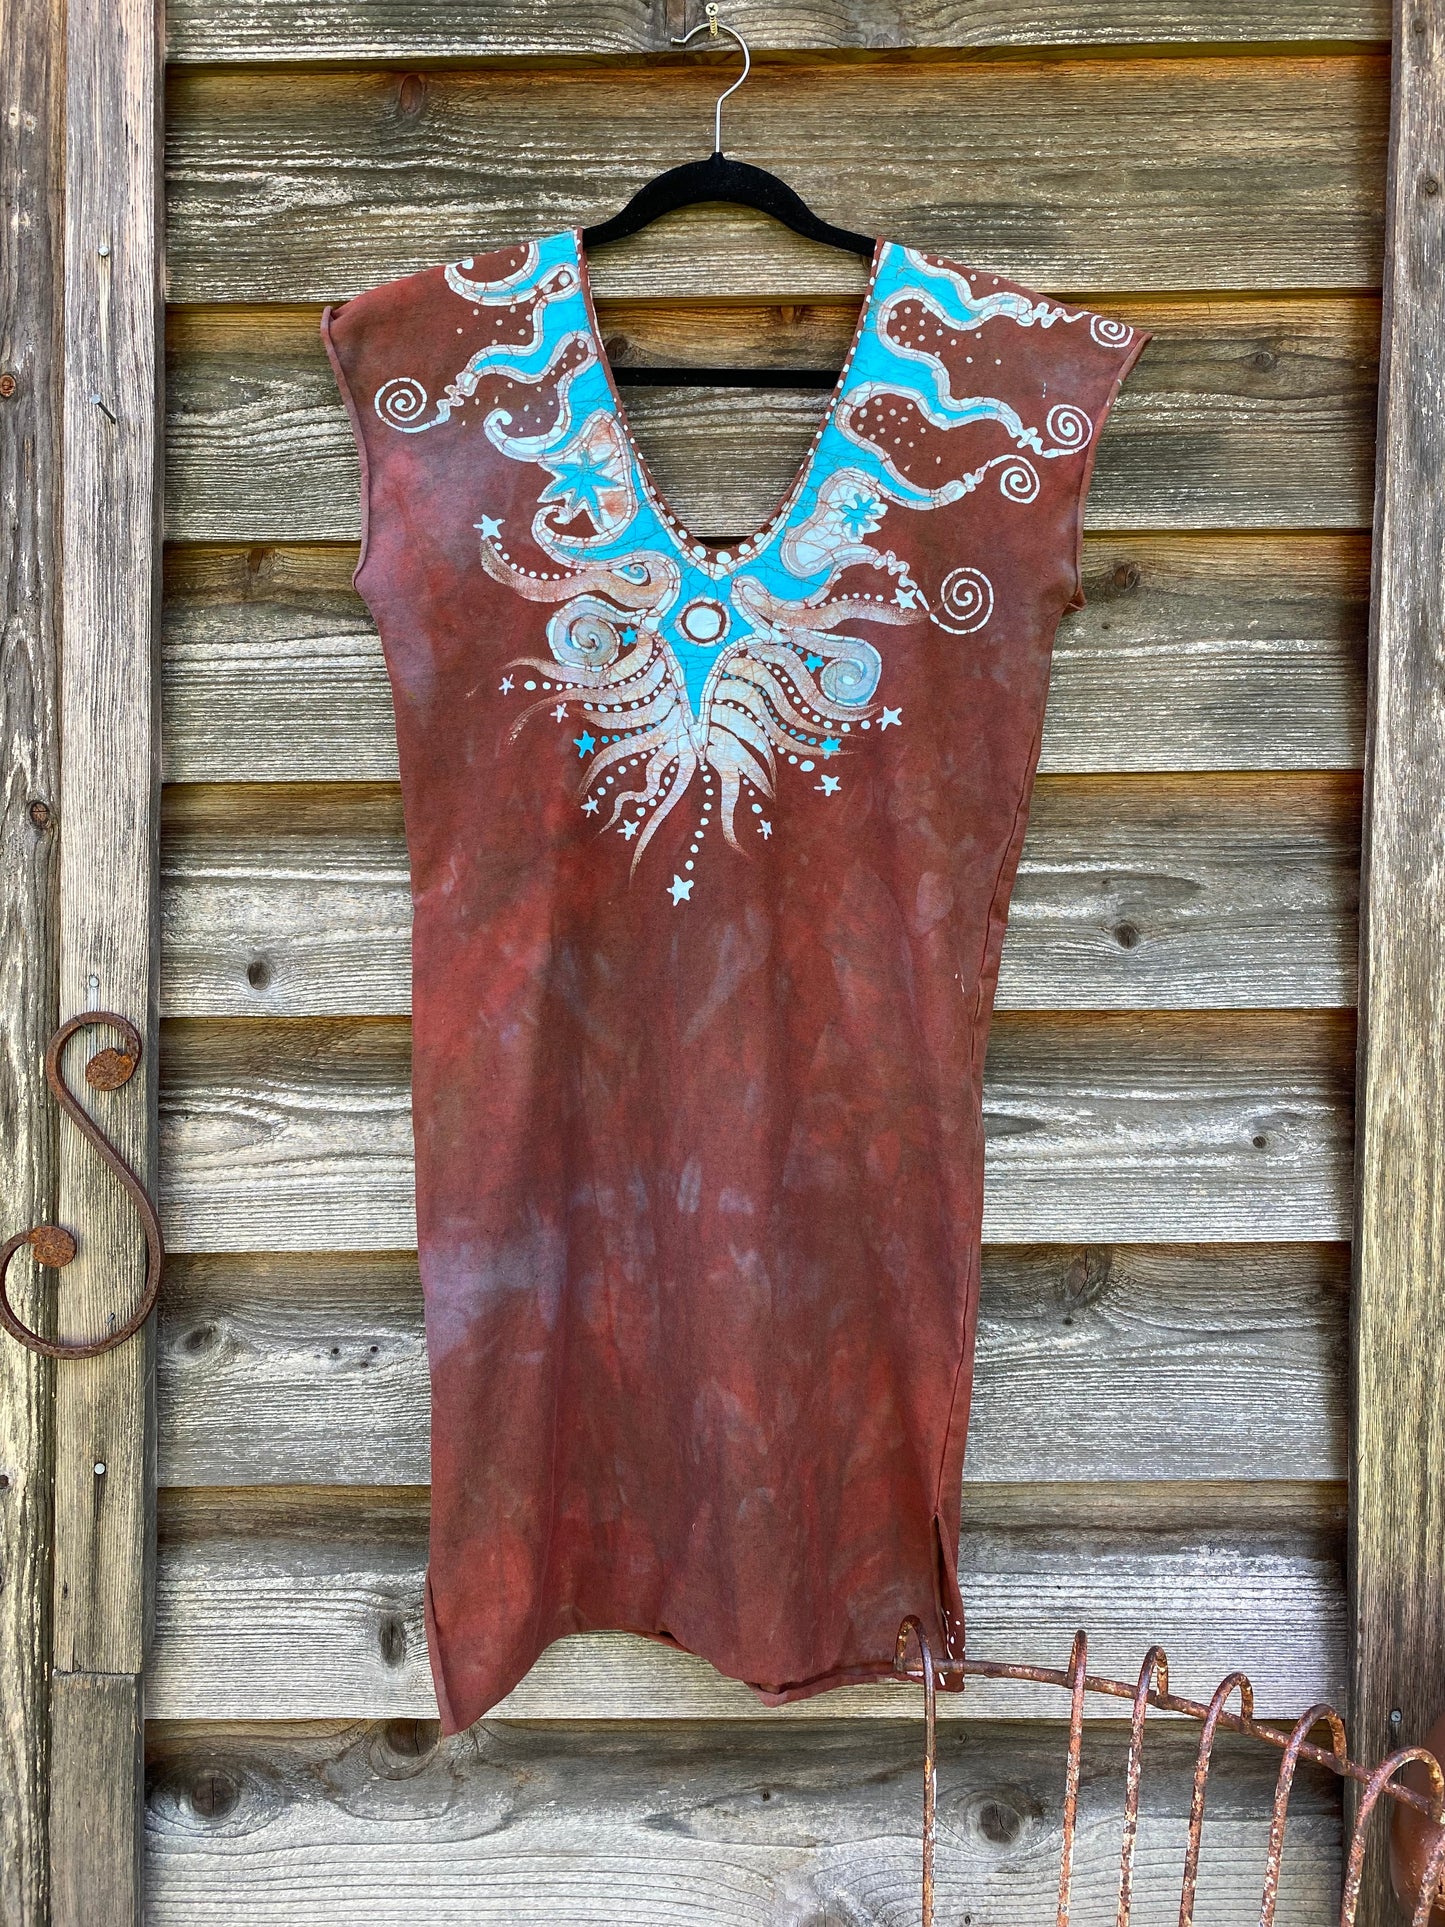 Sedona Red and Turquoise Tribal Stretchy Hemp Tube Dress - Size Large/Medium Batik Dresses Batikwalla 